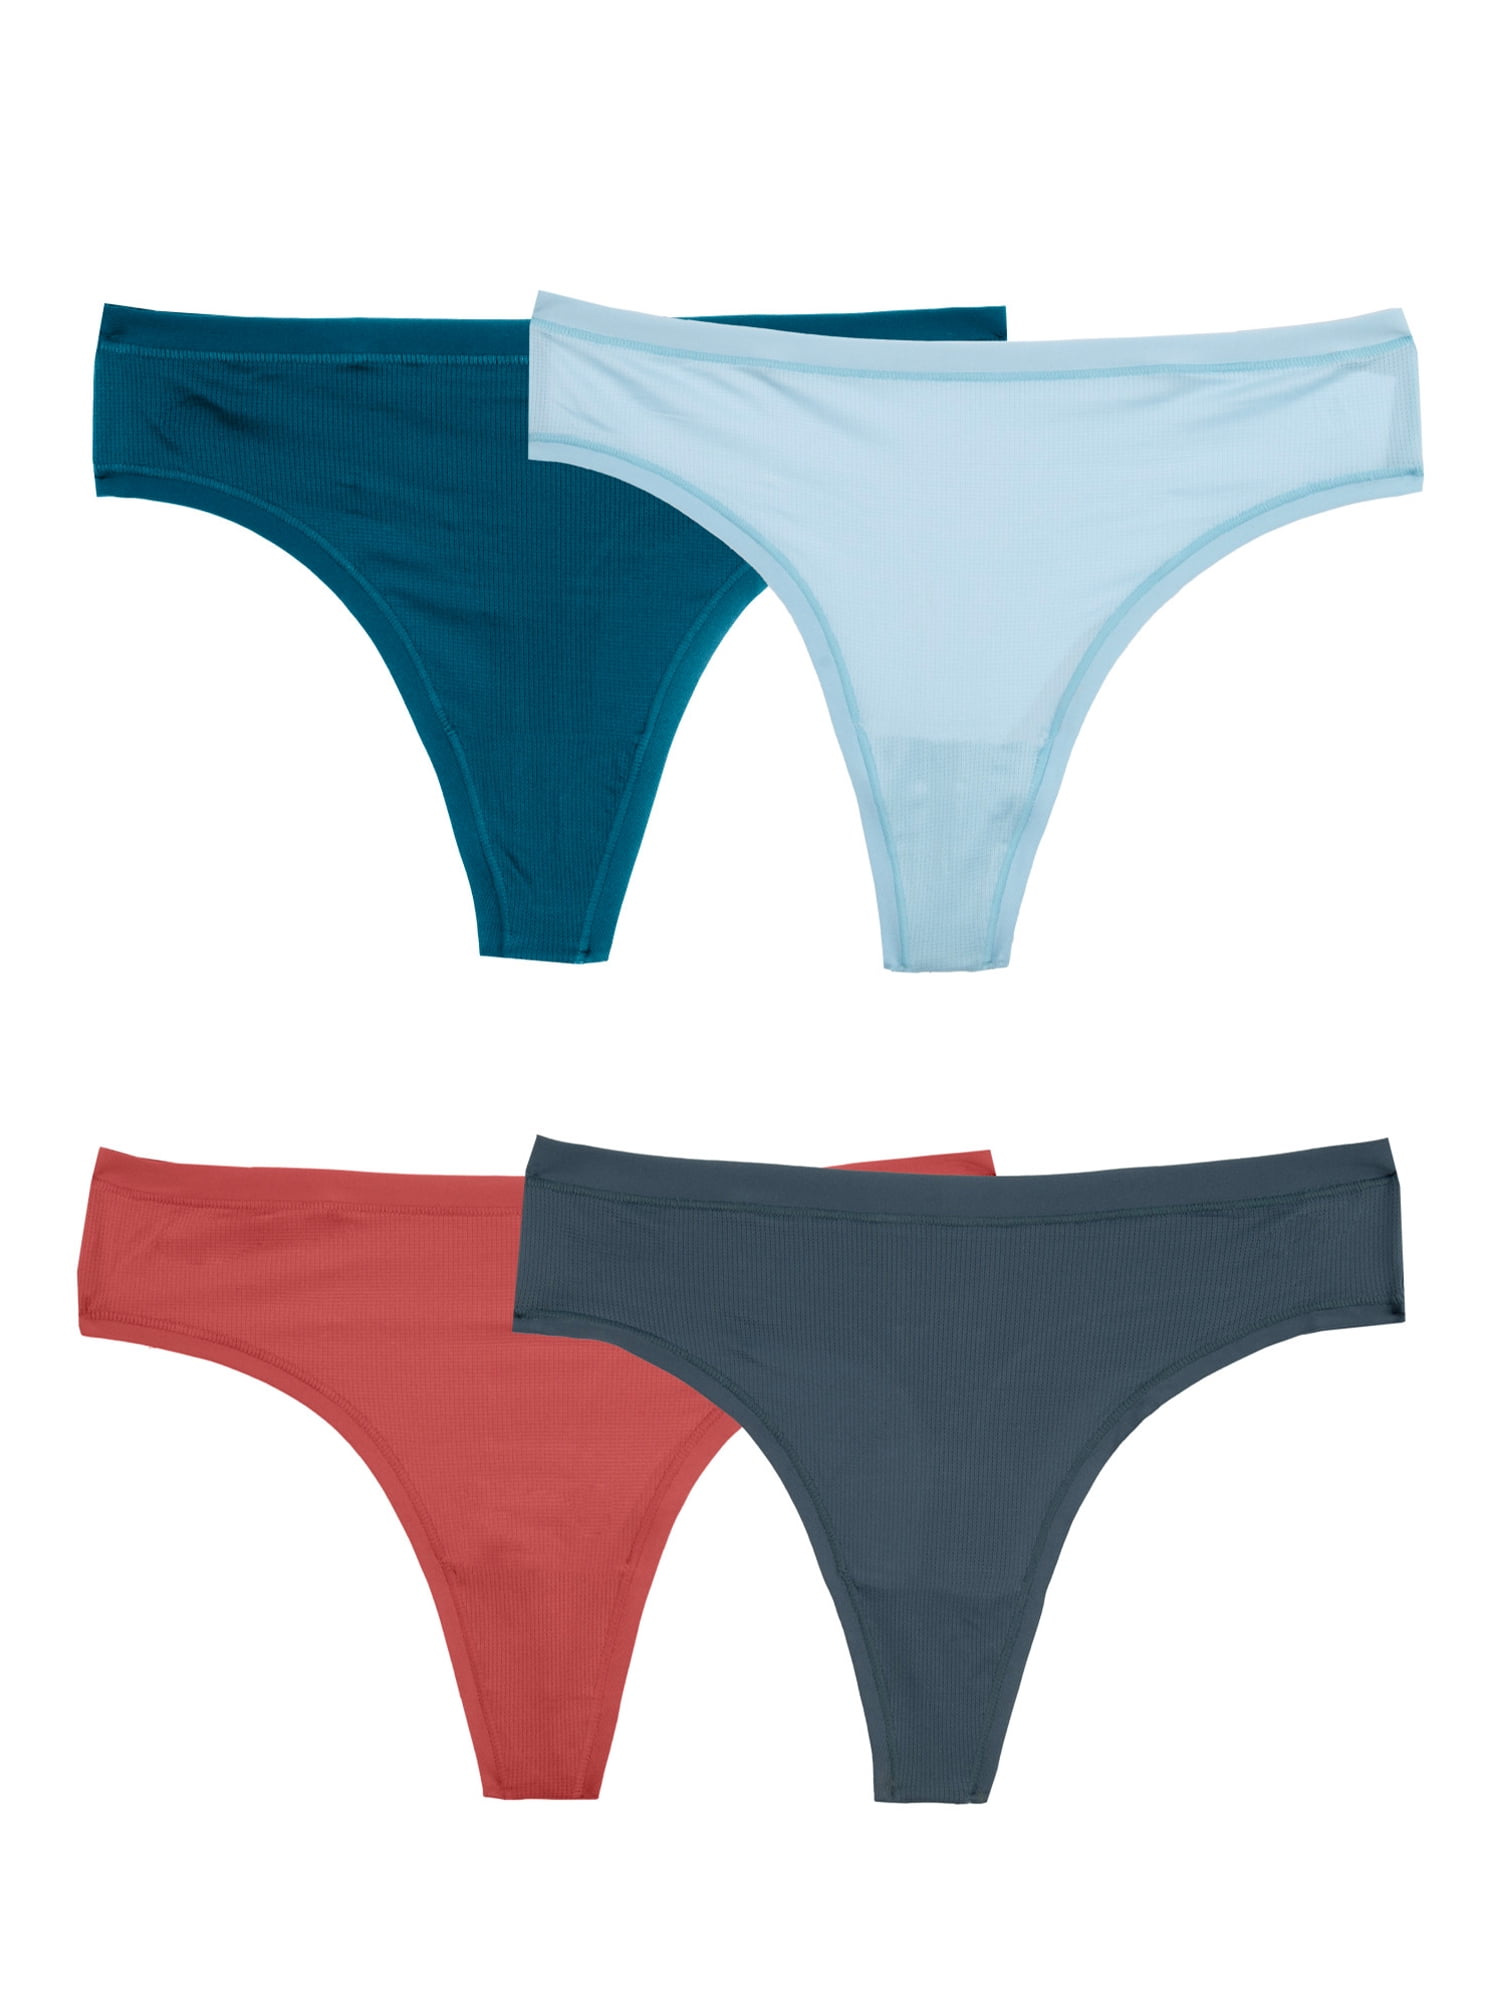 jooniyaa Women Variety of Underwear Pack T-Back Thong G-String Panties 